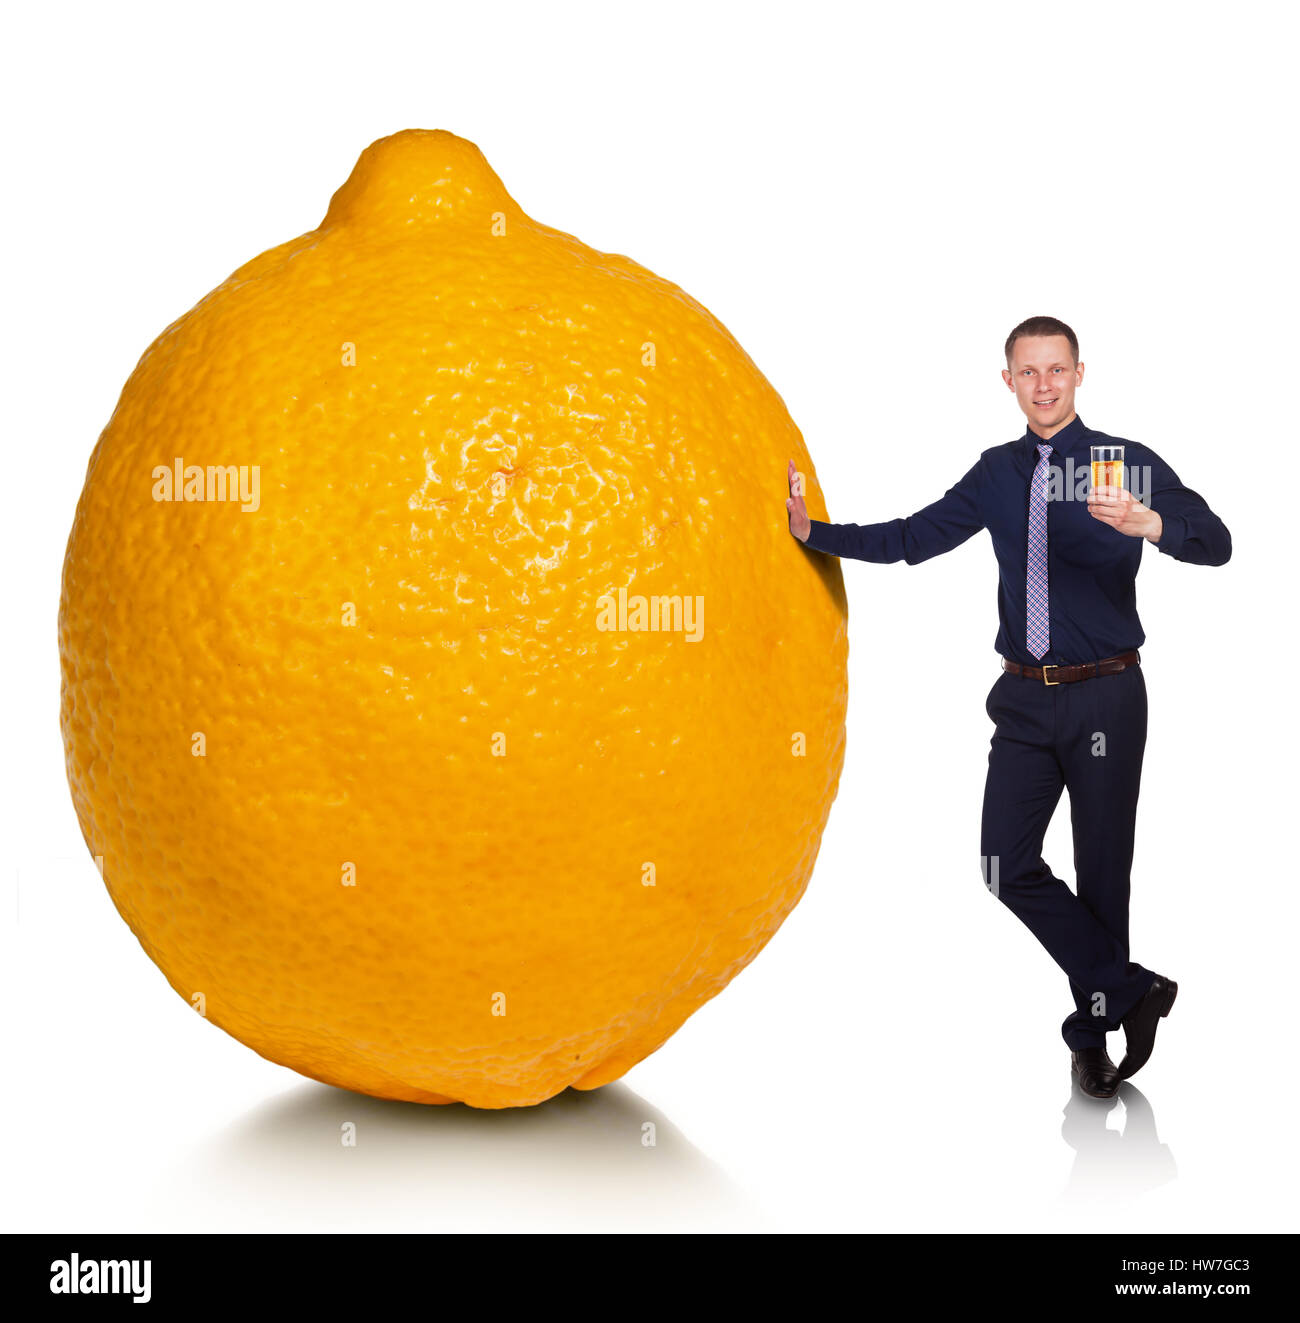 young-man-with-lemonade-stands-next-to-huge-lemon-HW7GC3.jpg